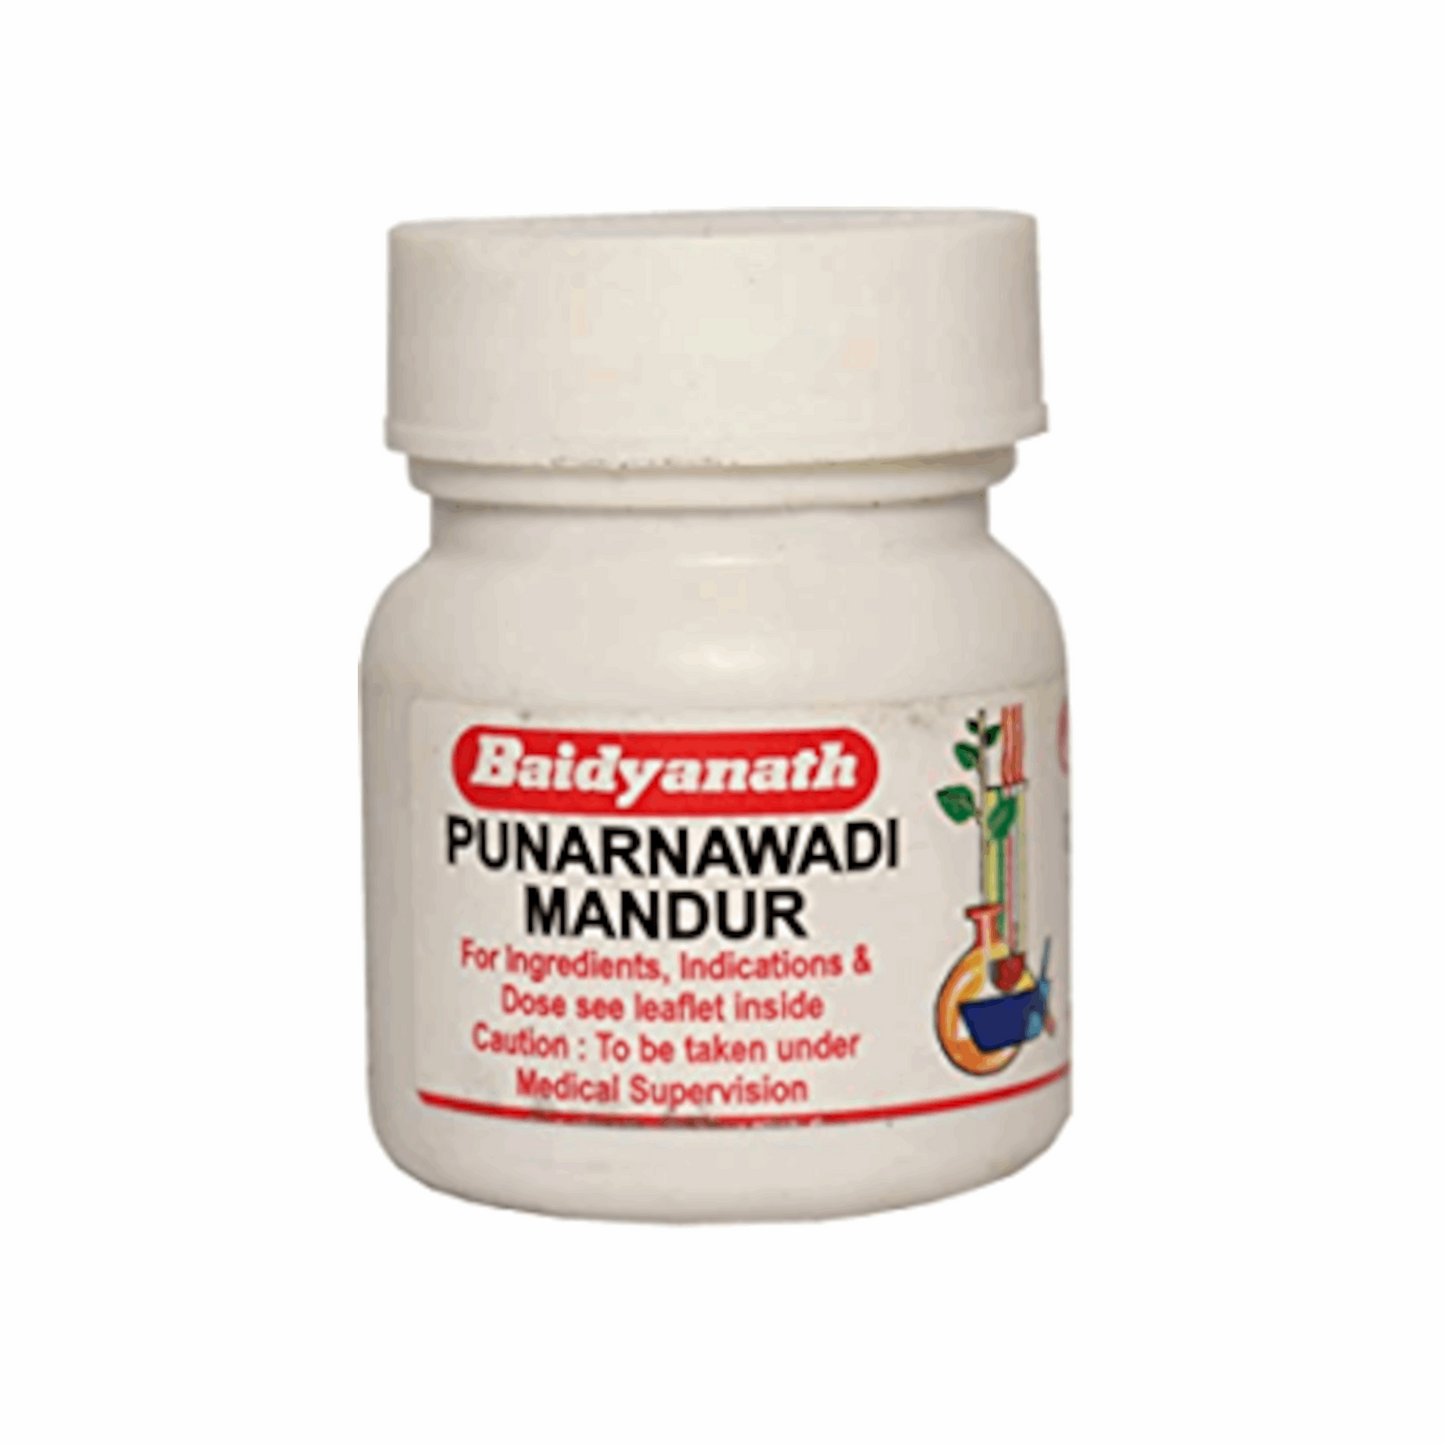 Image: Baidyanath Punarnawadi Mandur: 40 Tablets: Ayurvedic wellness support.